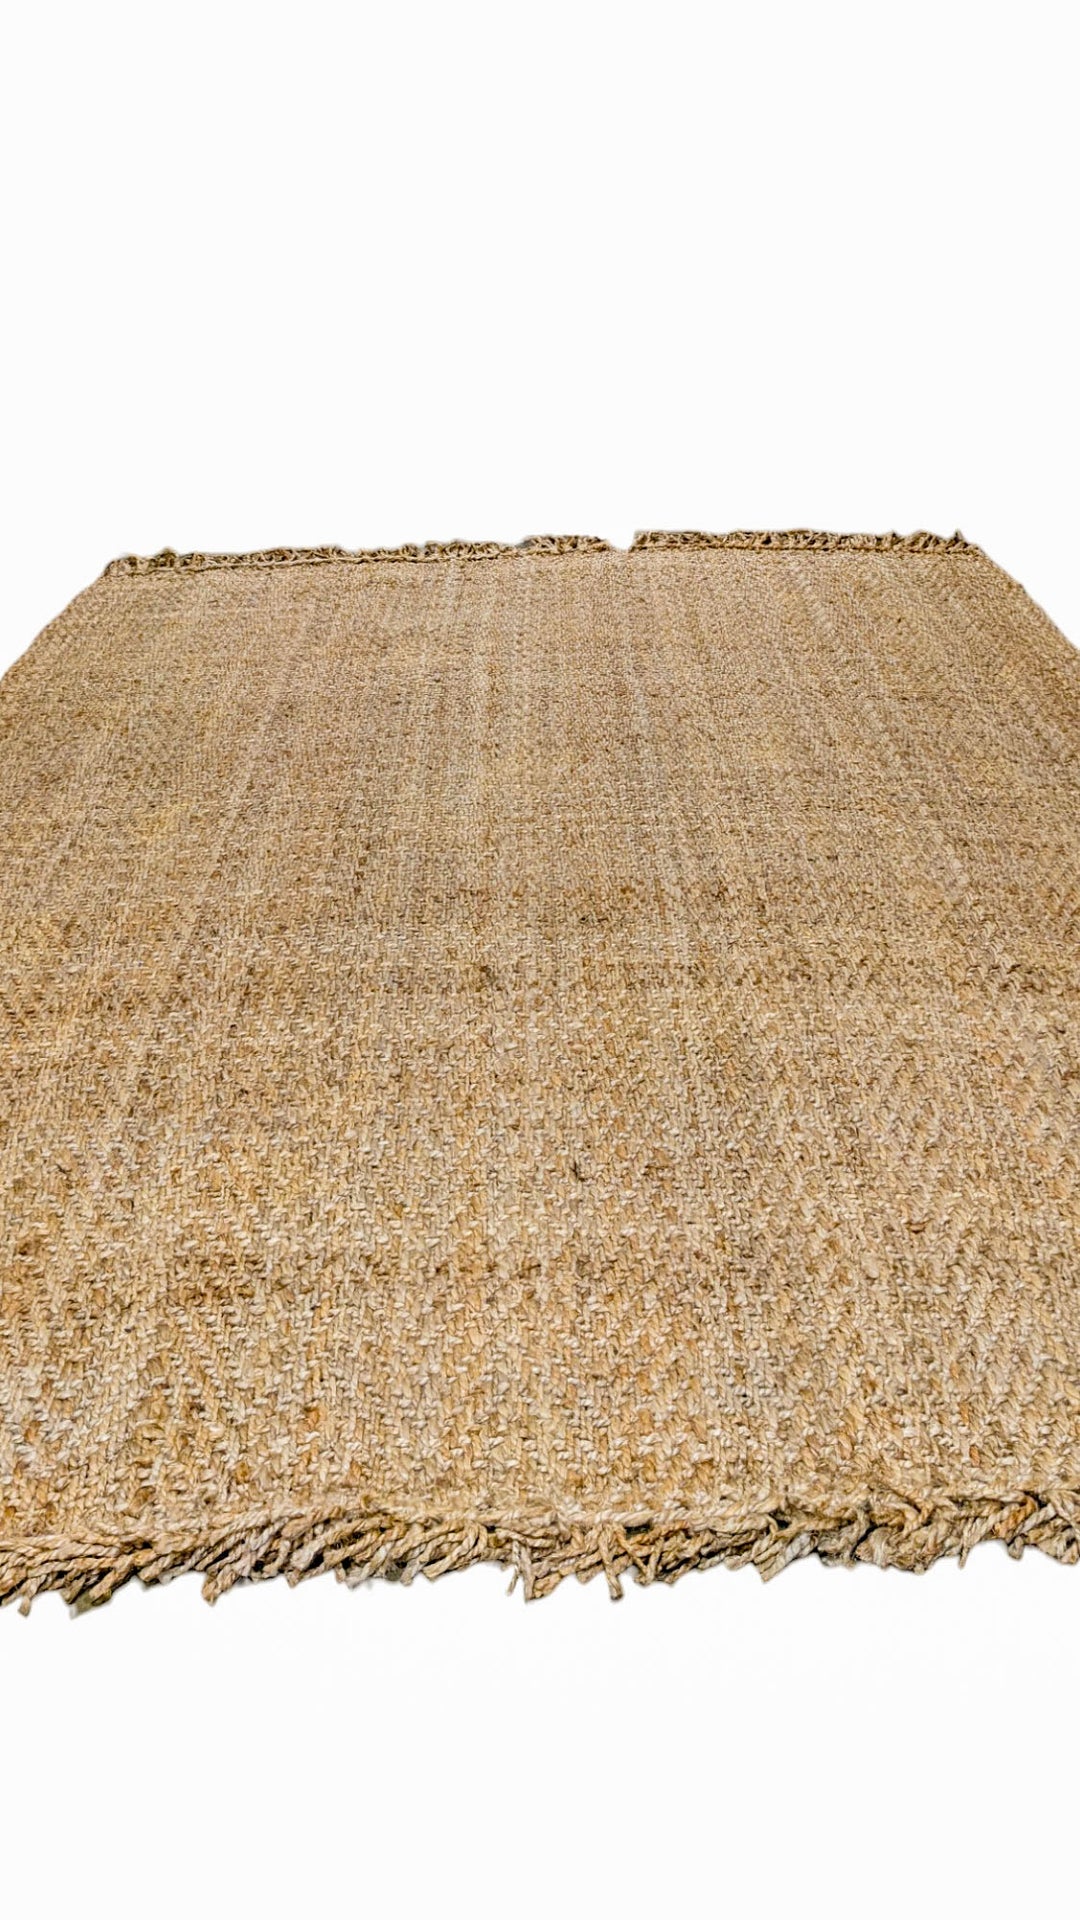 Sahar - Size: 10 x 8. 2 - Imam Carpet Co